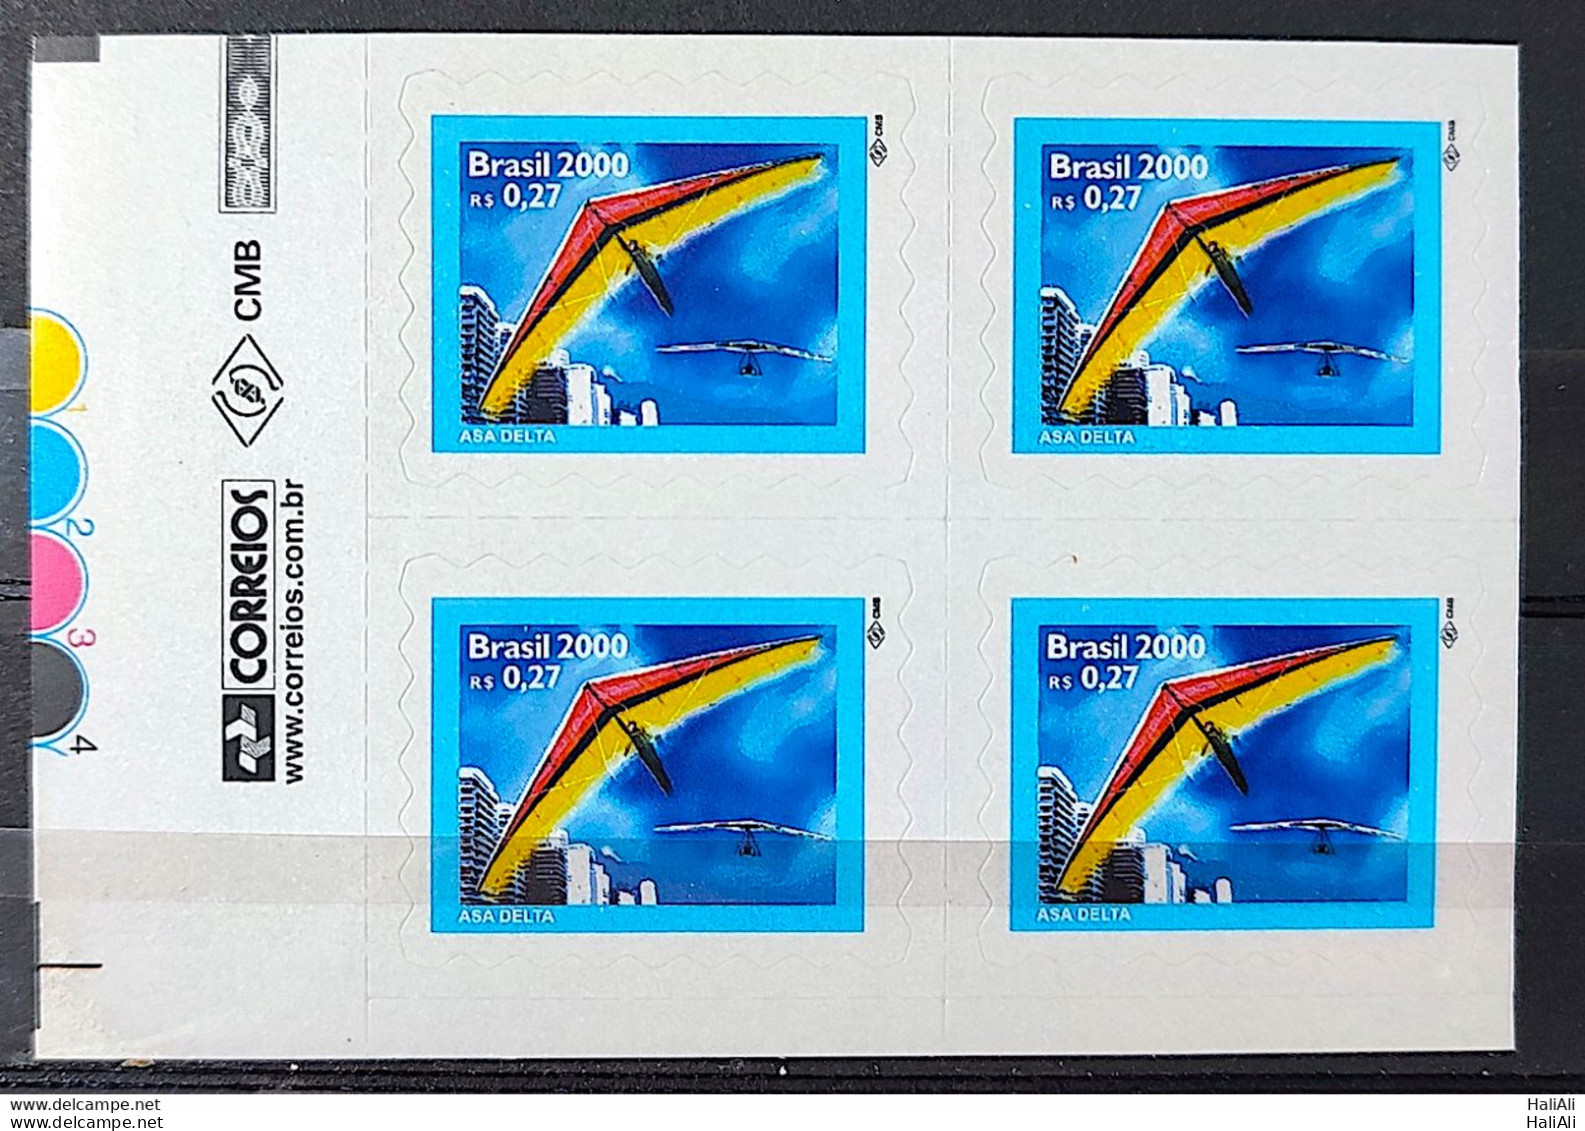 Brazil Regular Stamp Cod Rhm 787 Radical Sports Wing Delta Perce In Wave 2000 Block Of 4 Vignette Correios - Nuevos